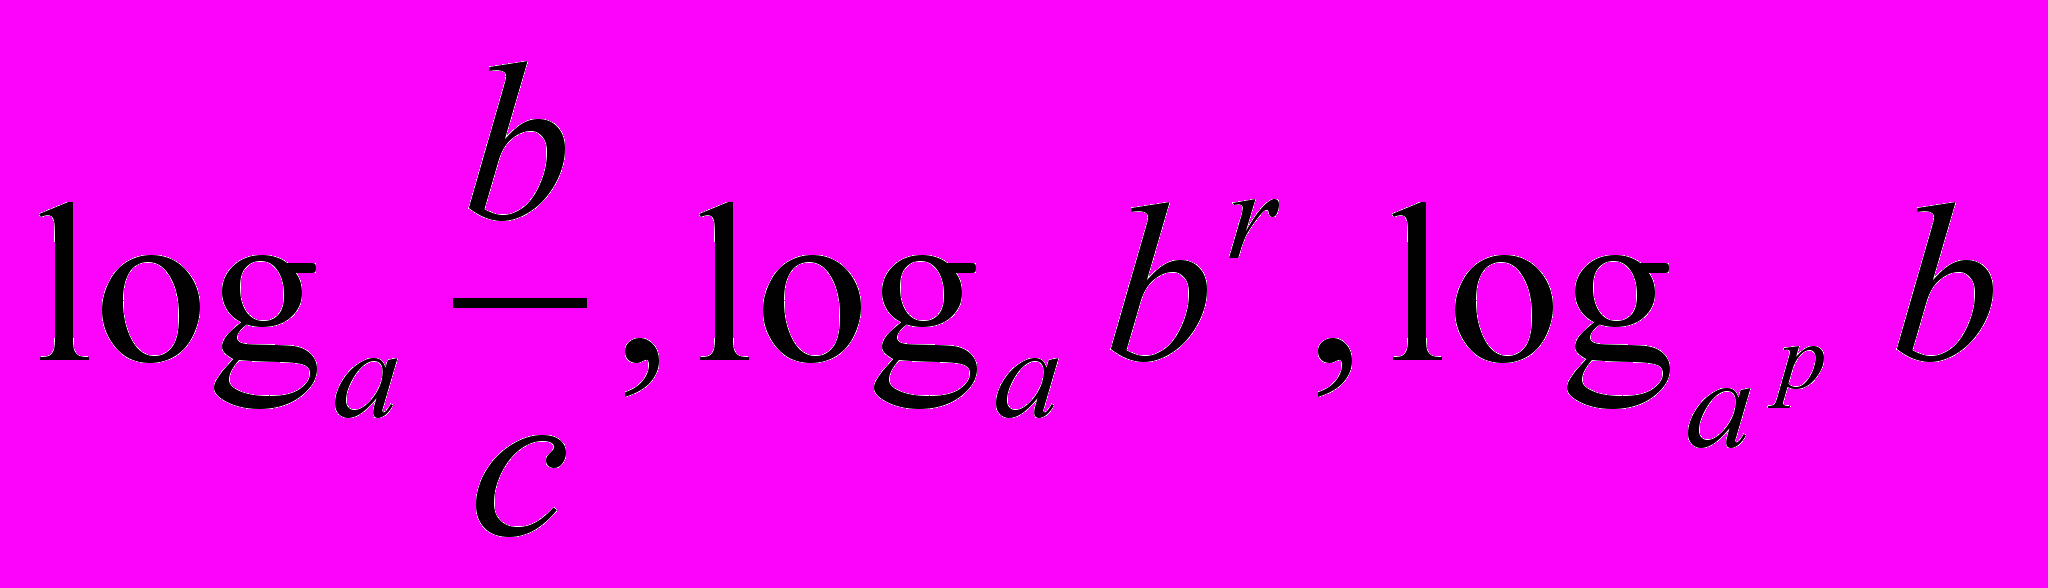 R log a b